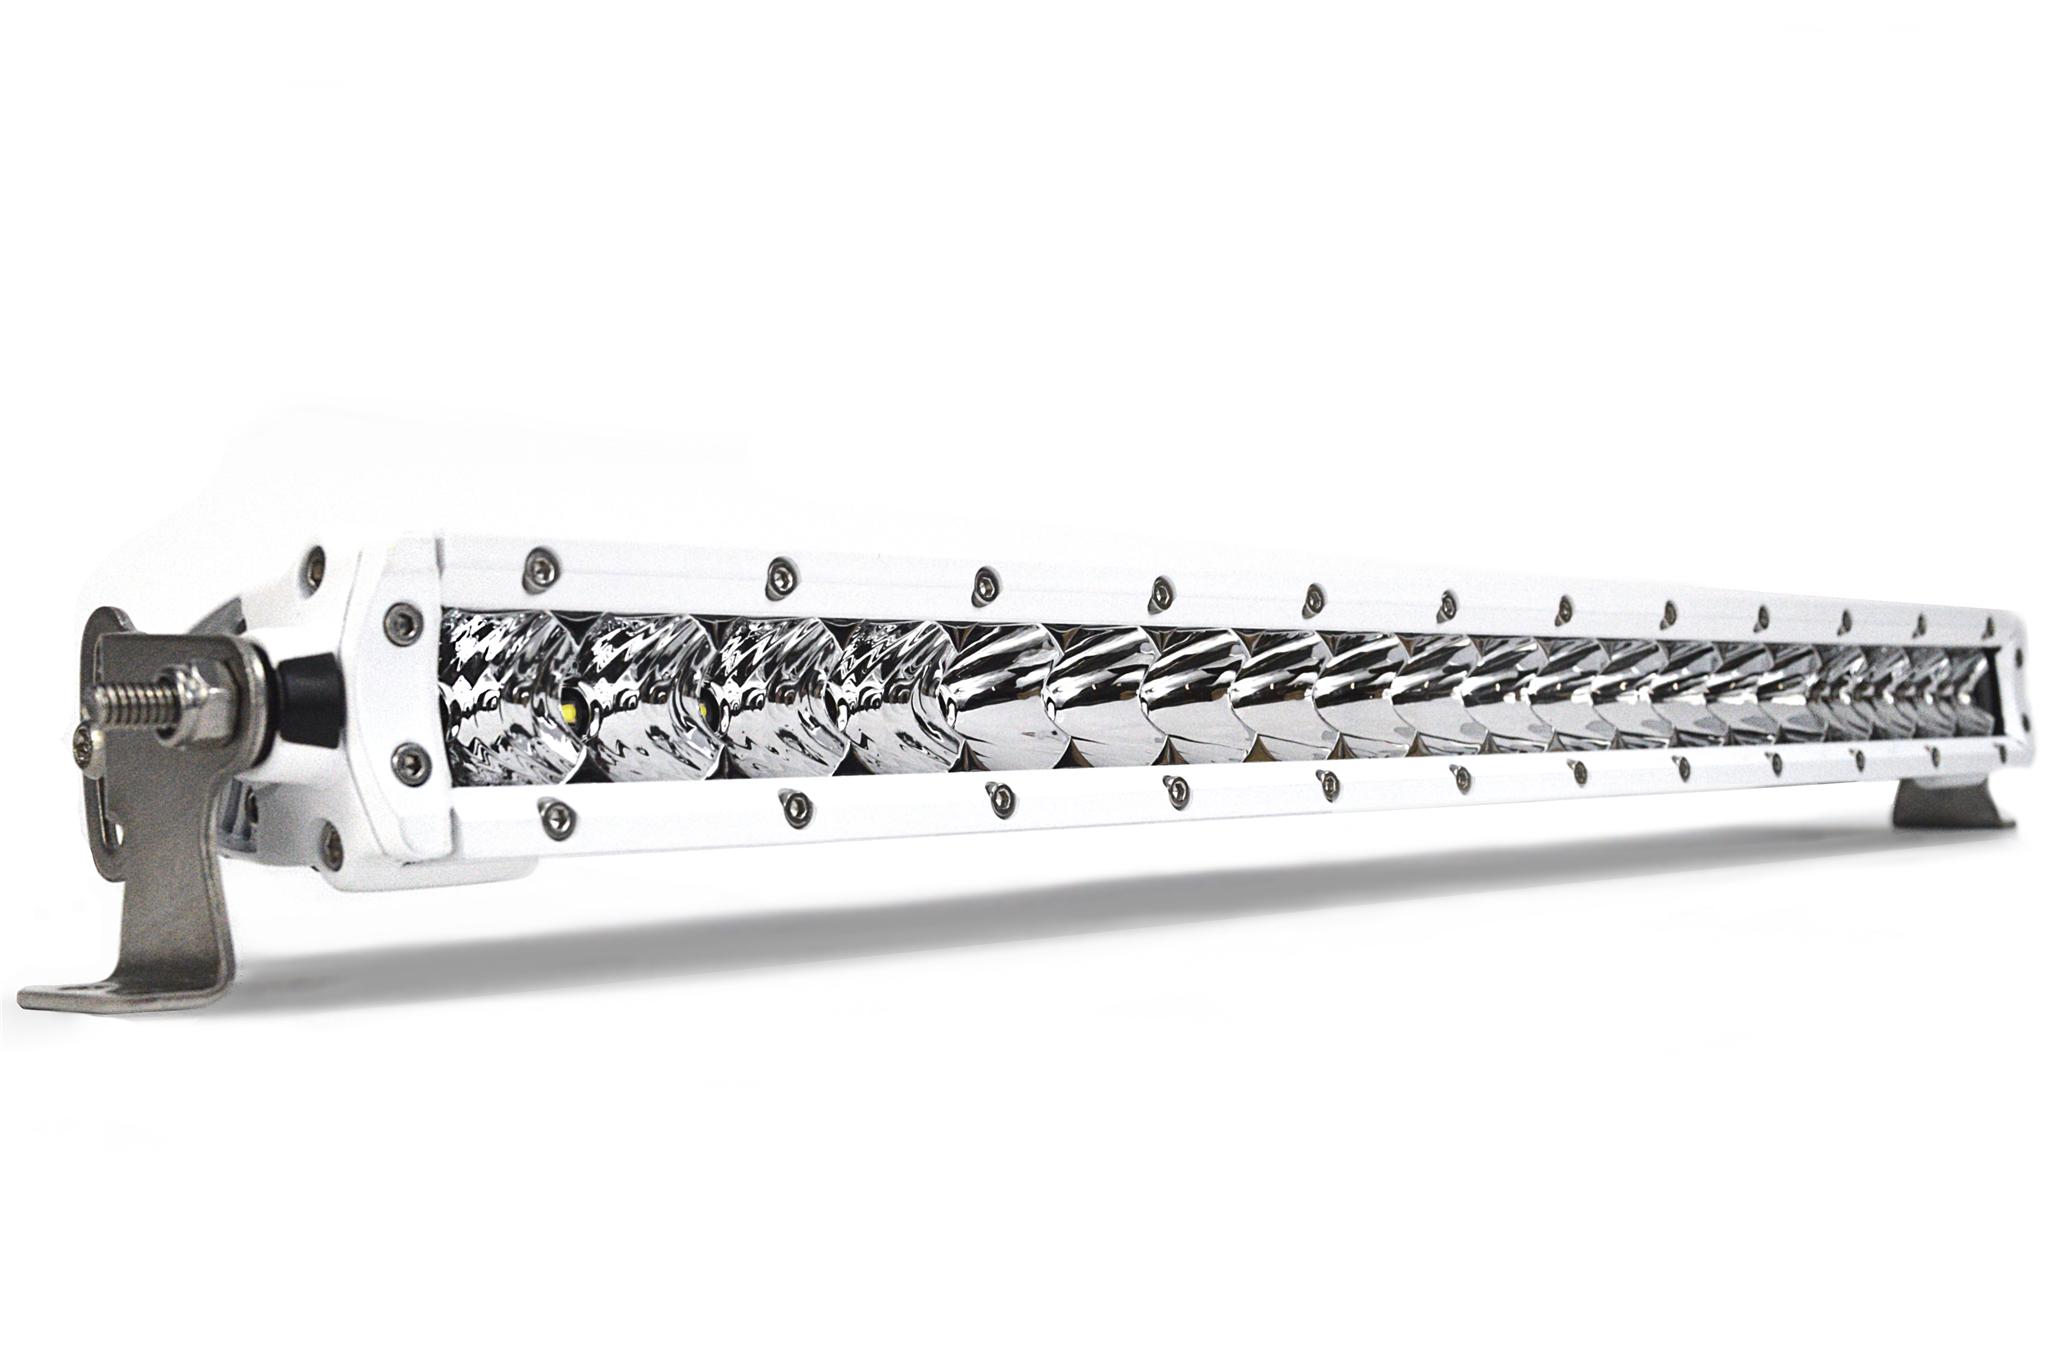 New- 20 Inch Mini Emergency Light Bar, TIR Optics - Black Oak LED